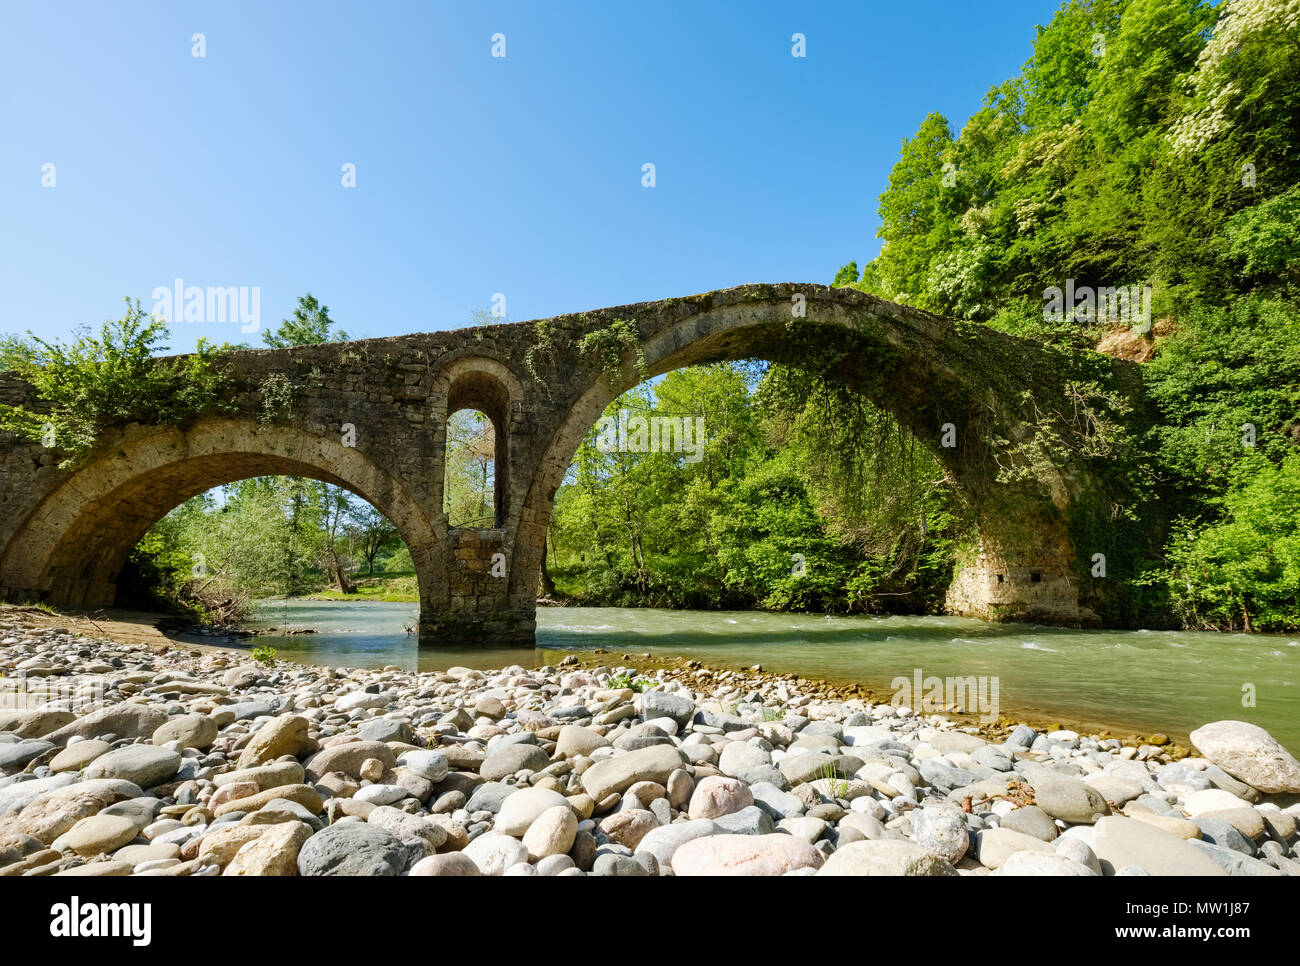 Old Ottoman stone arch bridge Ura e Golikut over river Shkumbin, Korca region, Albania Stock Photo